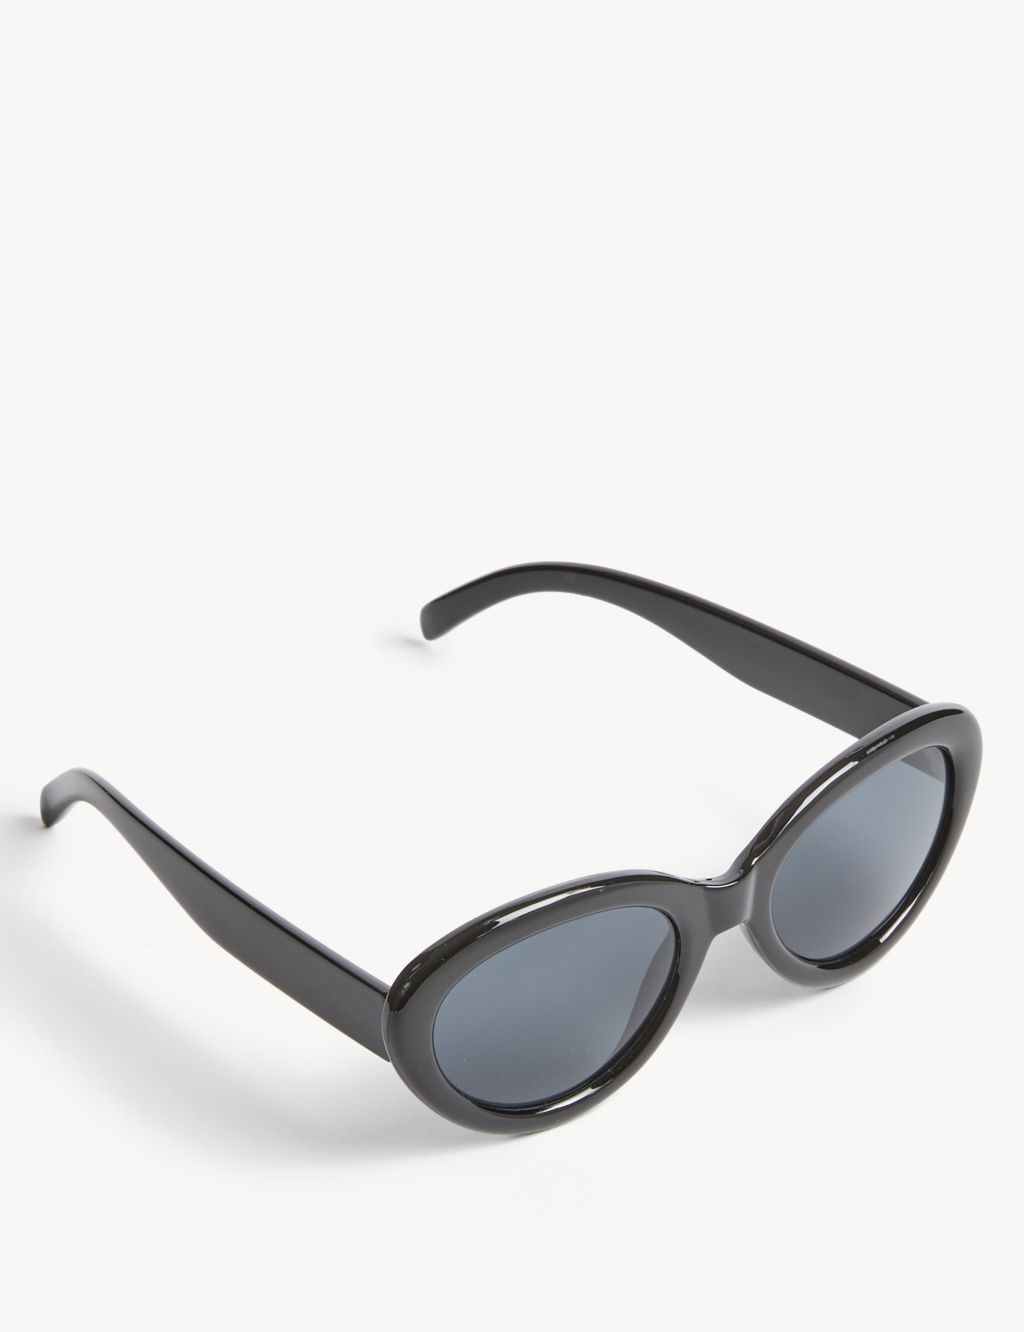 Oval Cat Eye Sunglasses image 2